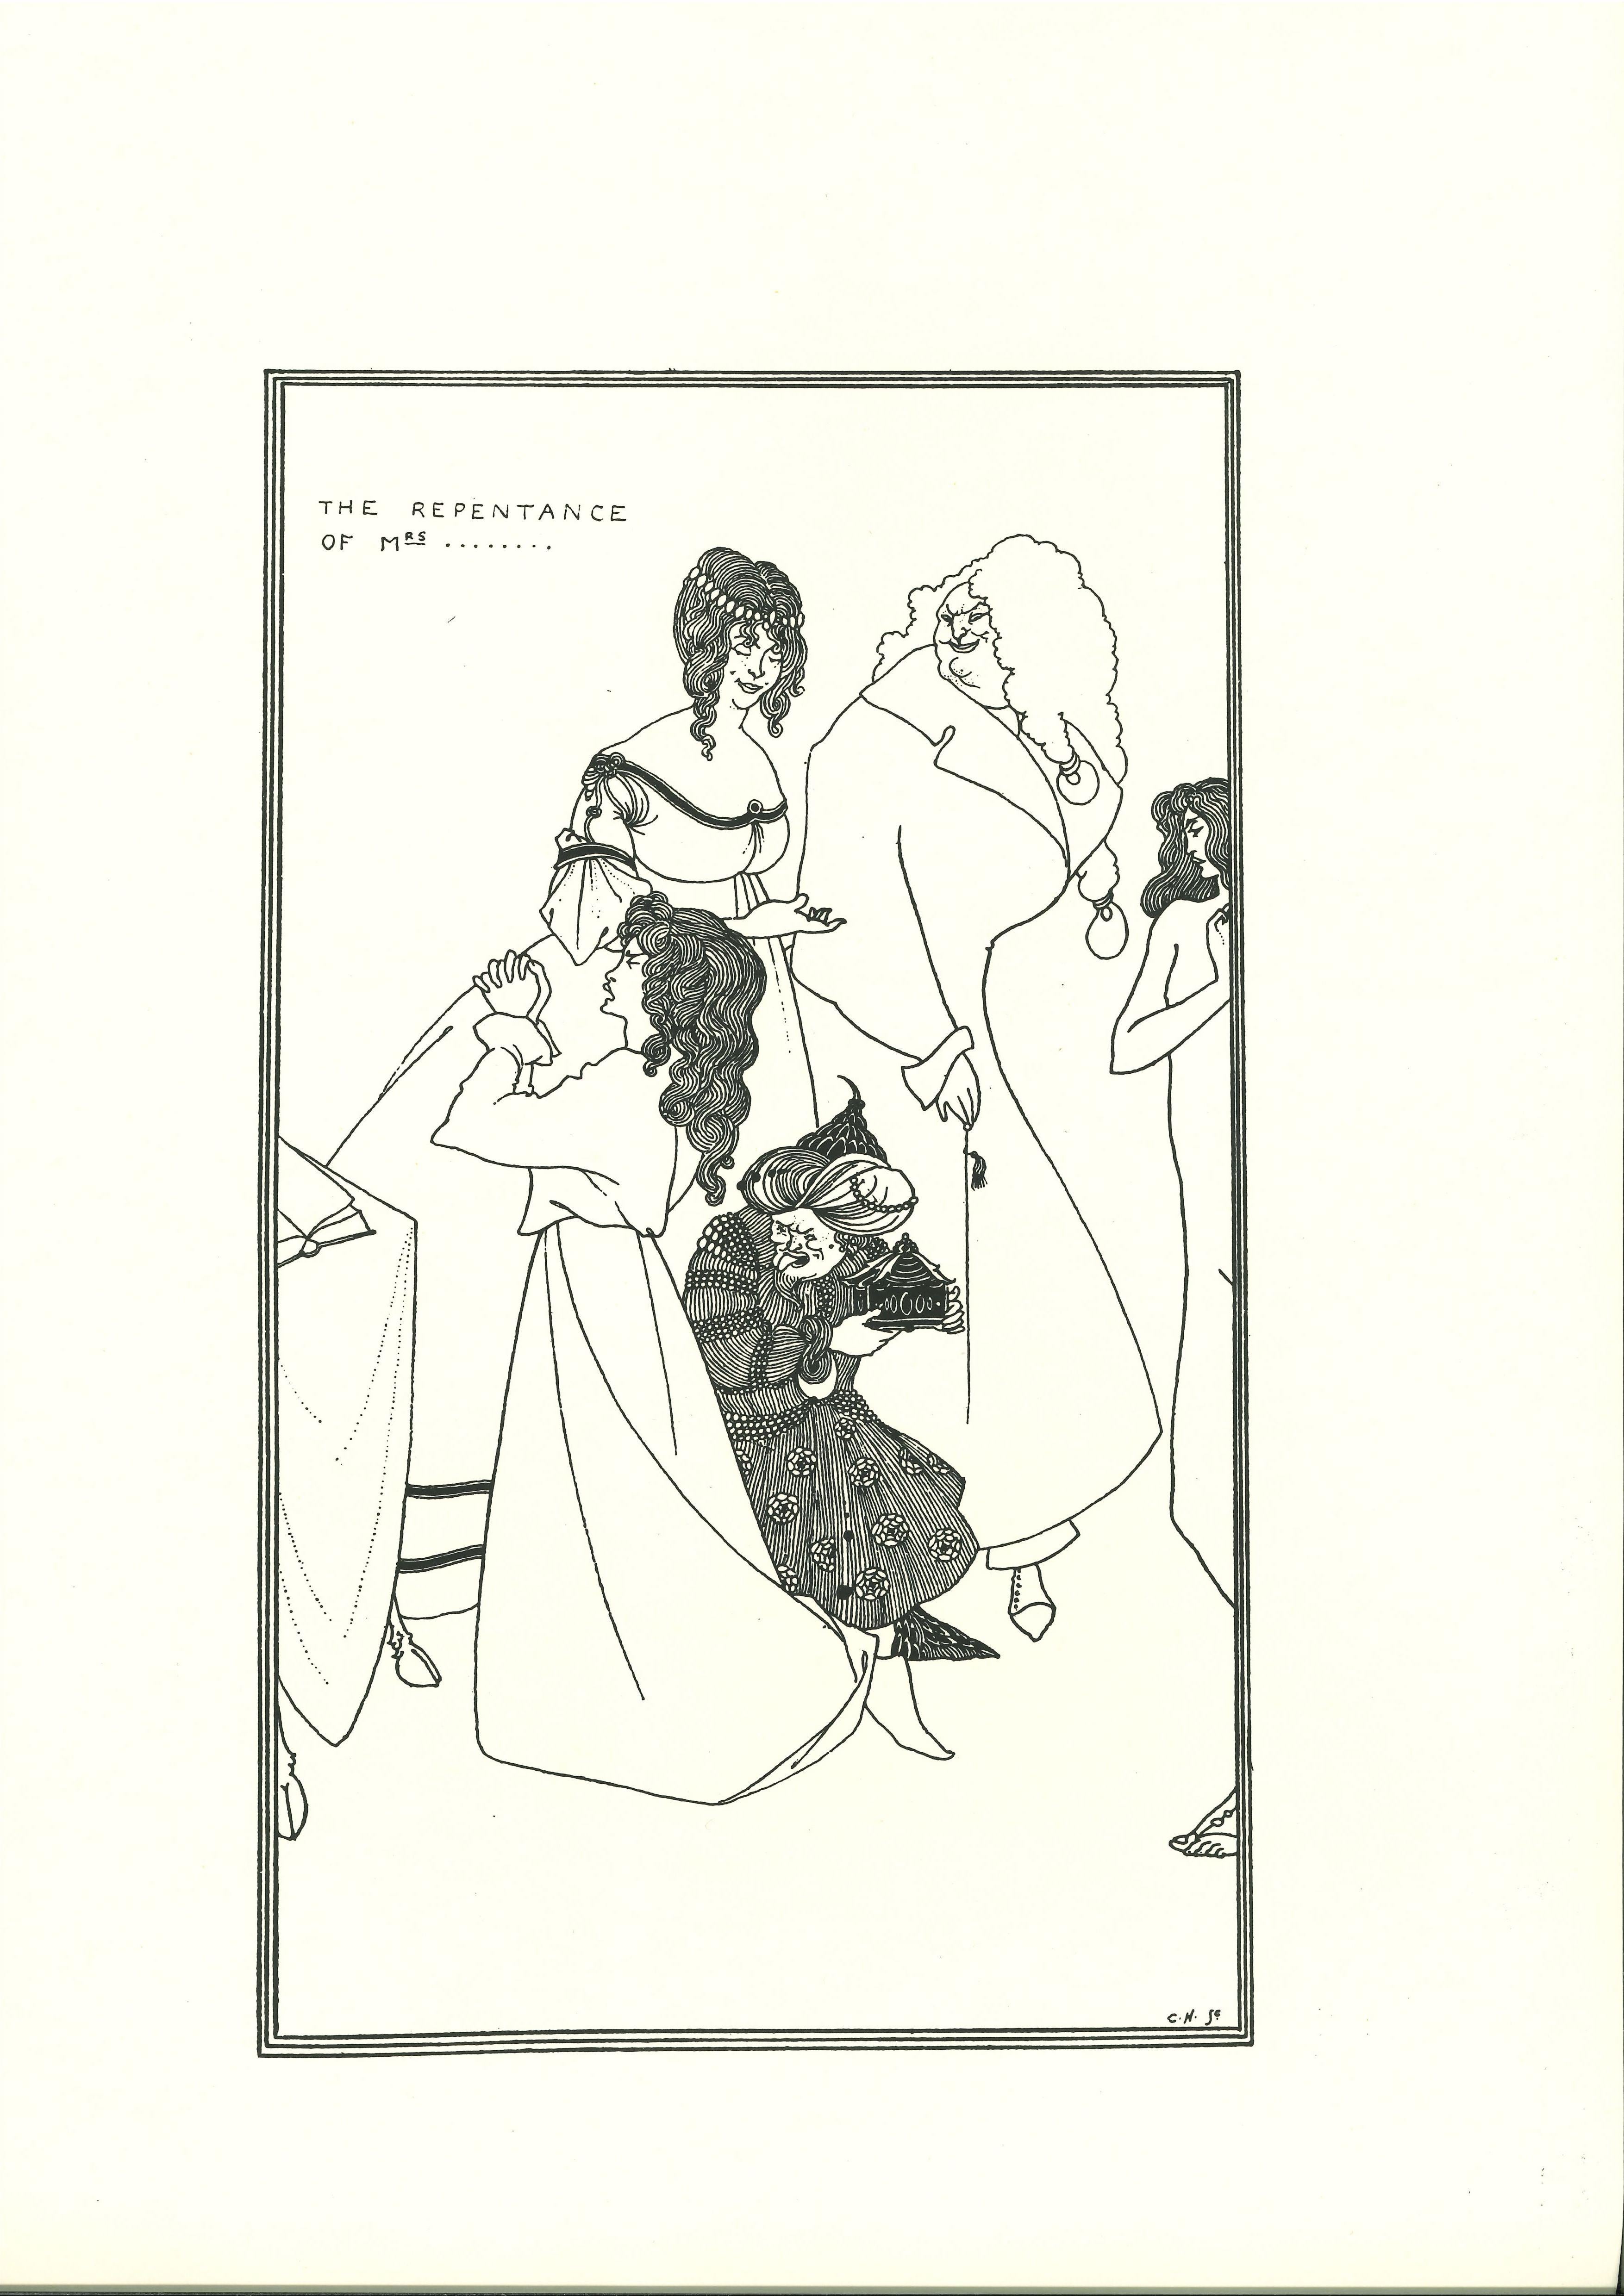 Aubrey Vincent Beardsley Figurative Print - The Repentance of Mrs... - Original Lithograph by Aubrey Beardsley - 1970